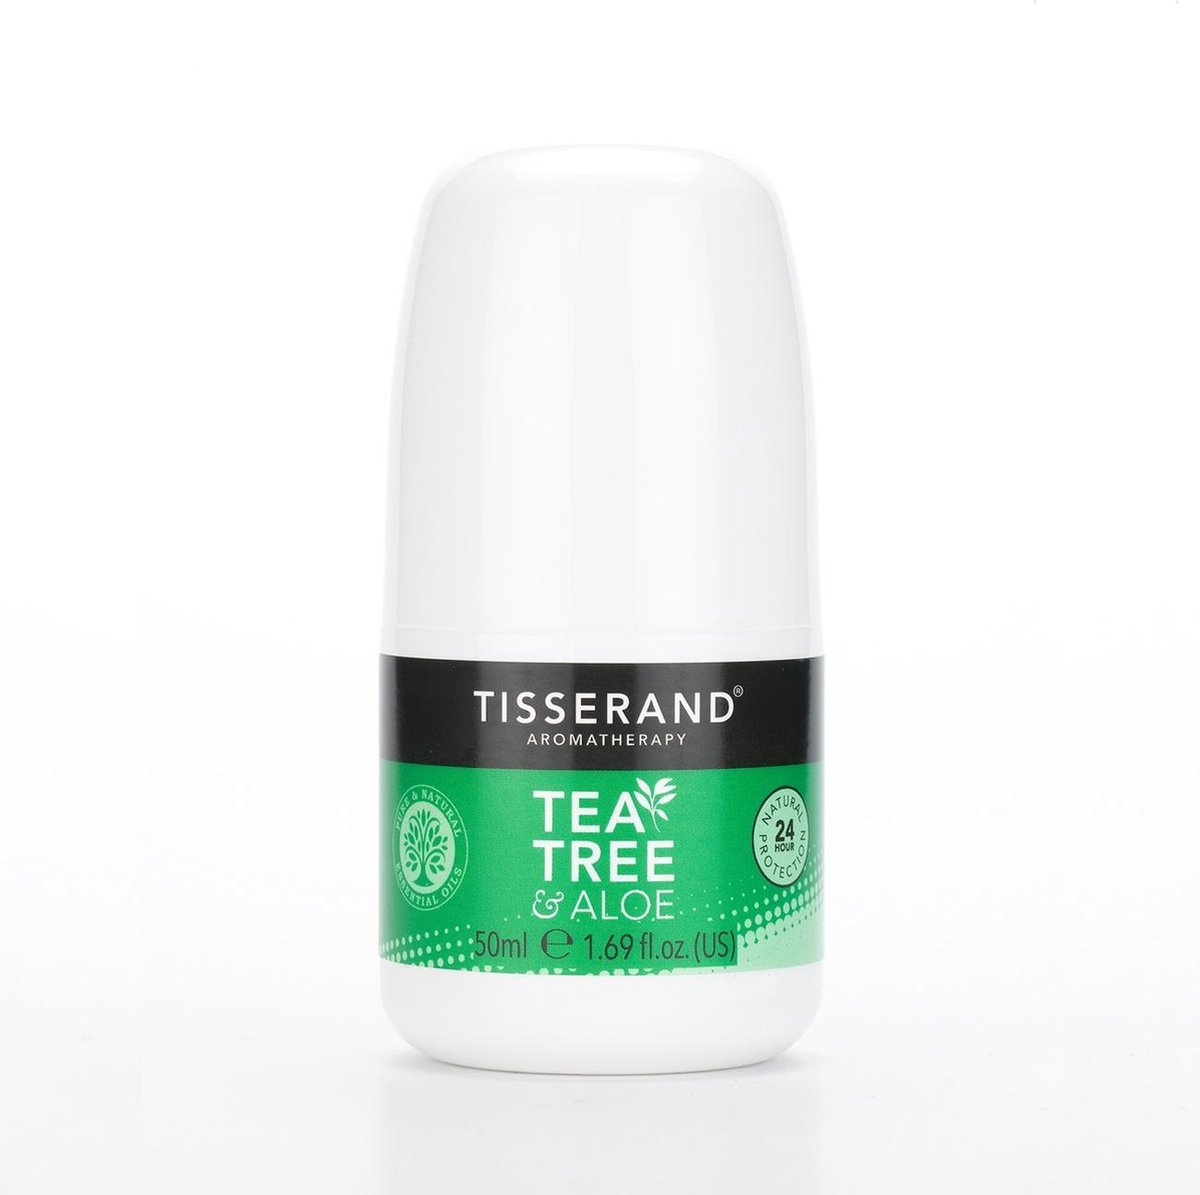 Tisserand Tea Tree and Aloe 24 hour Deodorant